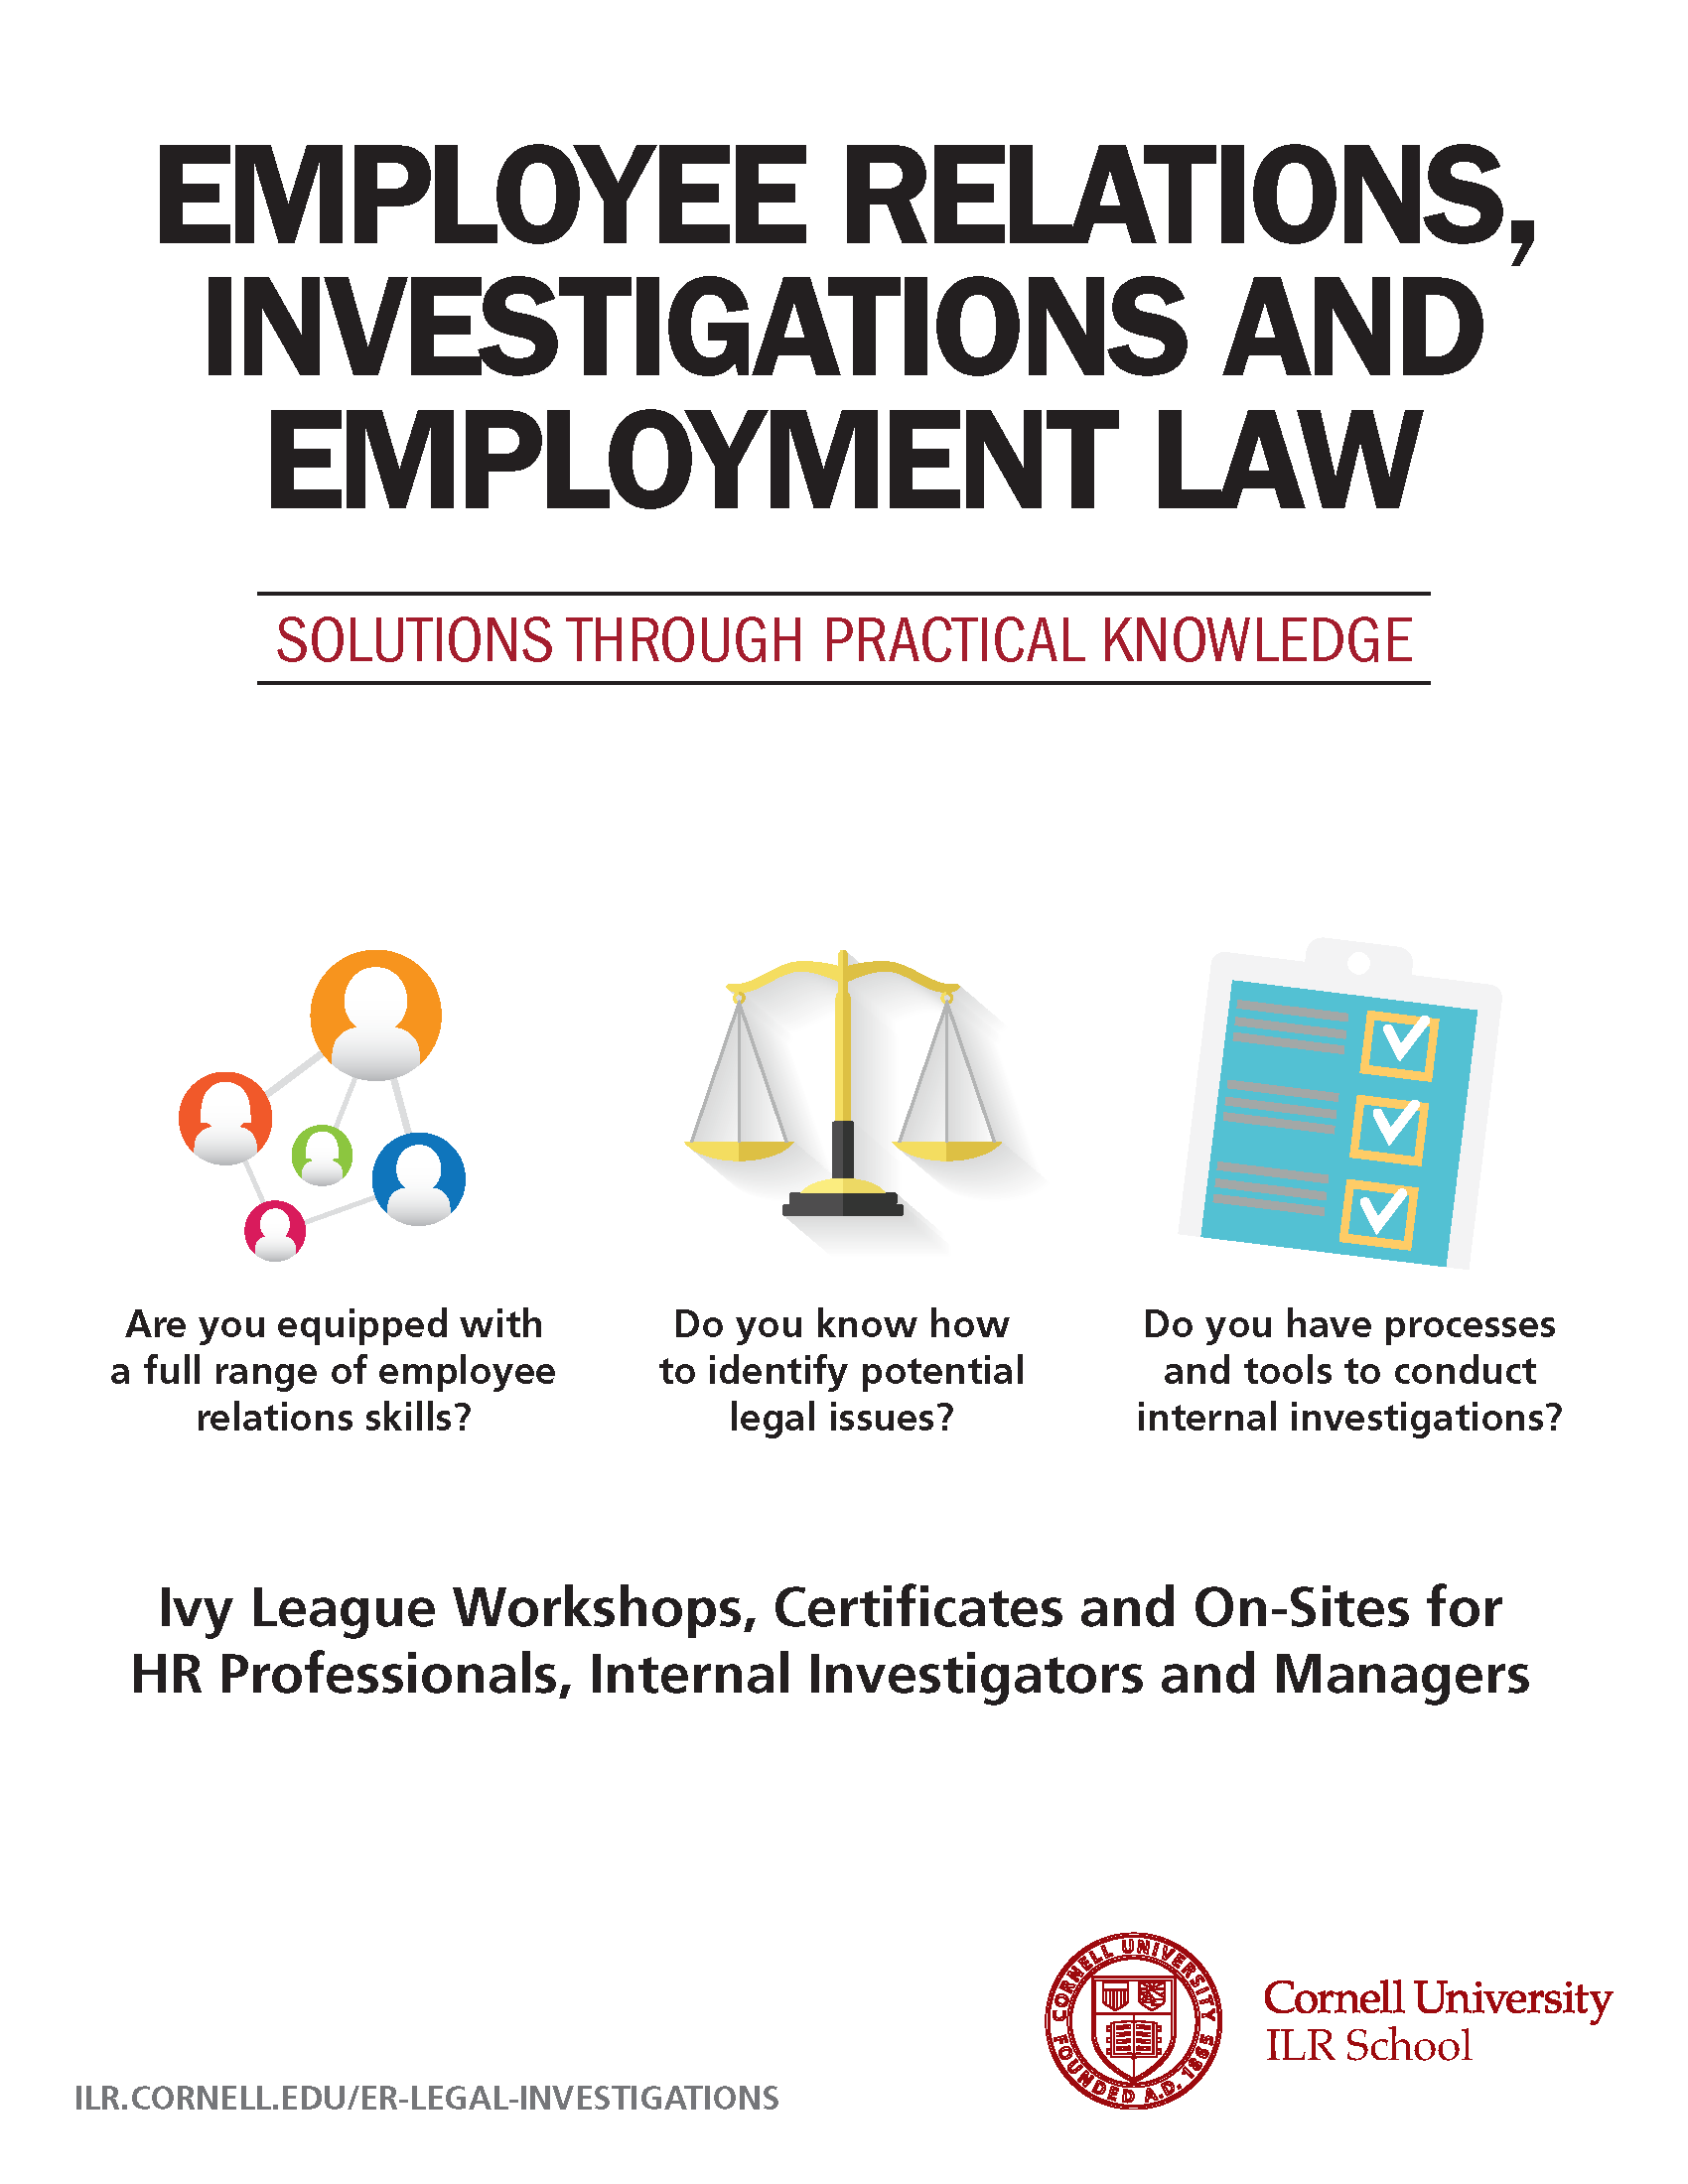 employee relations, internal investigations, employment law, hcd, human capital development, cornell ilr